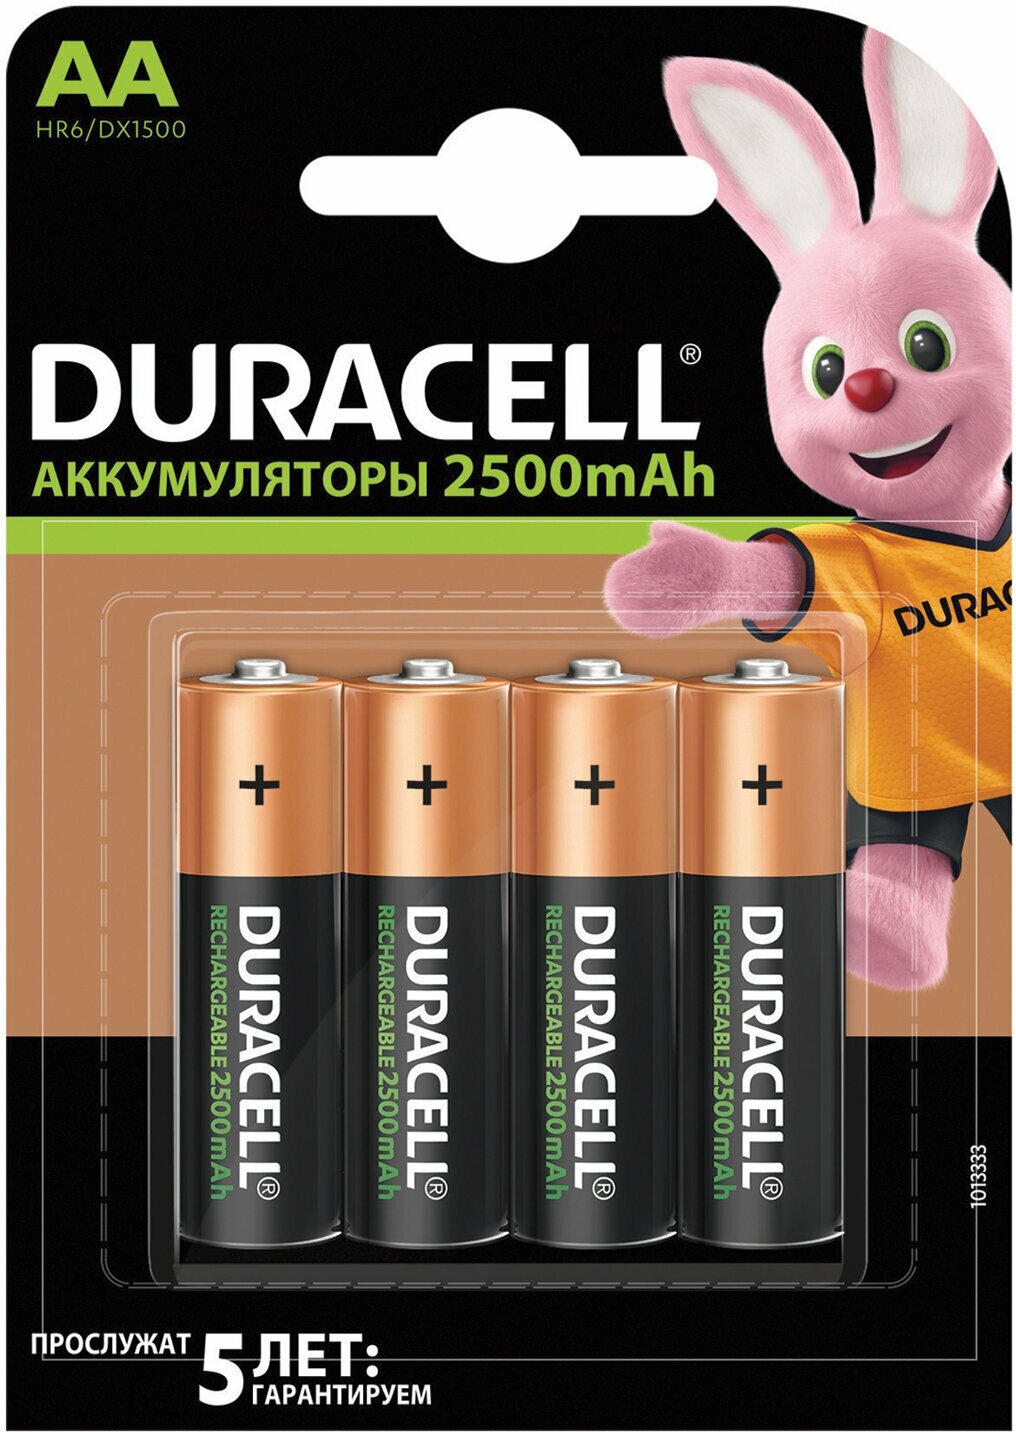 Батарейки аккумуляторные Duracell 4 шт, АА HR6, Ni-Mh, 2500 mAh, блистер (81472345)